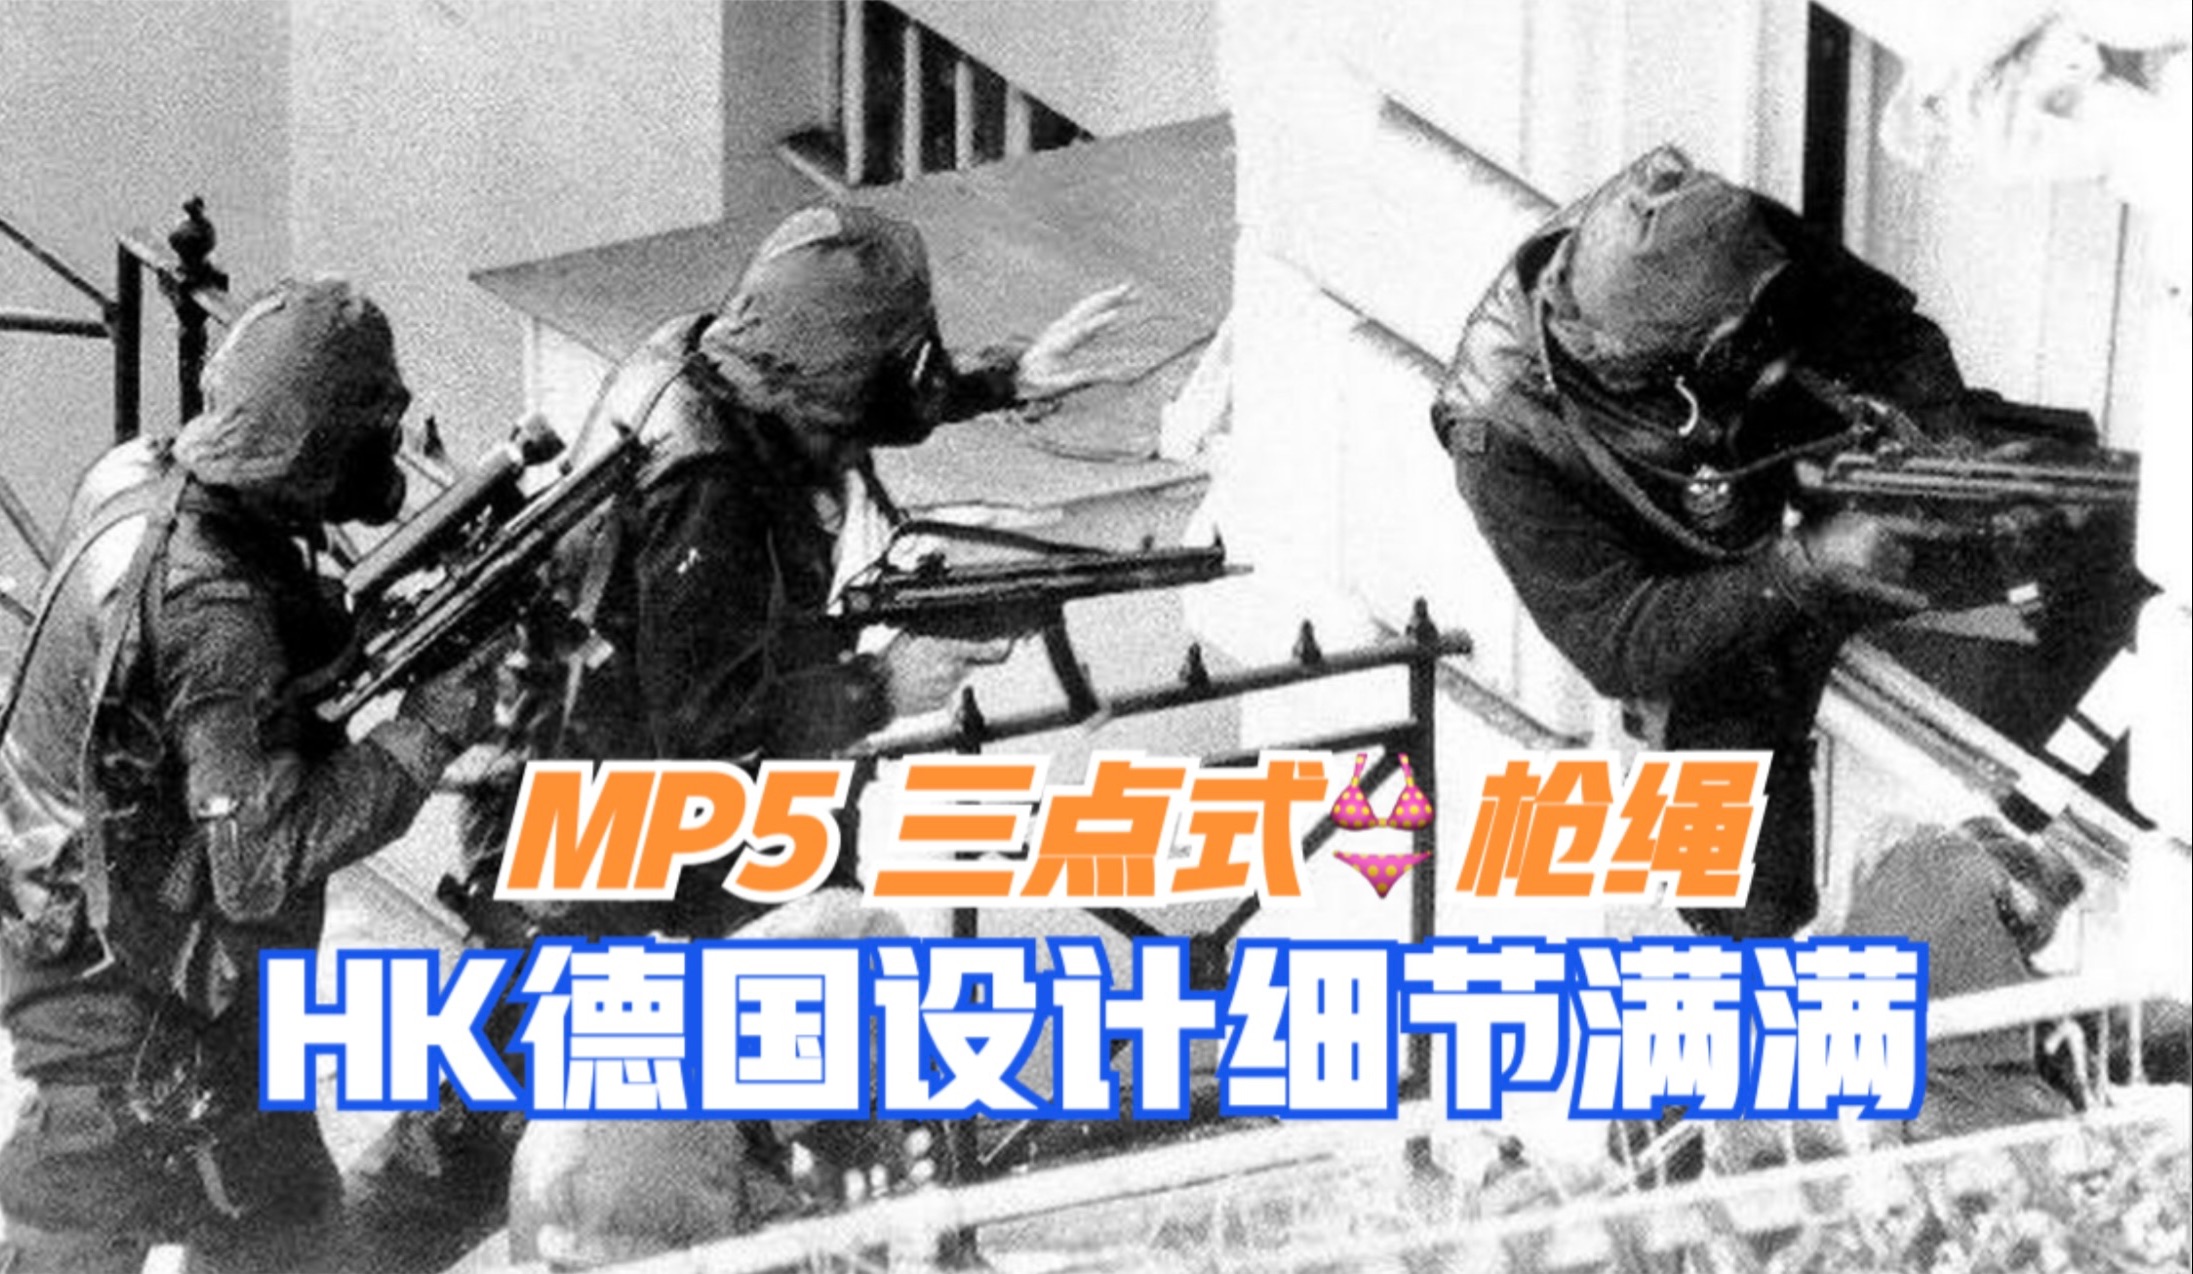 HK MP5 3点枪绳的灵魂所在